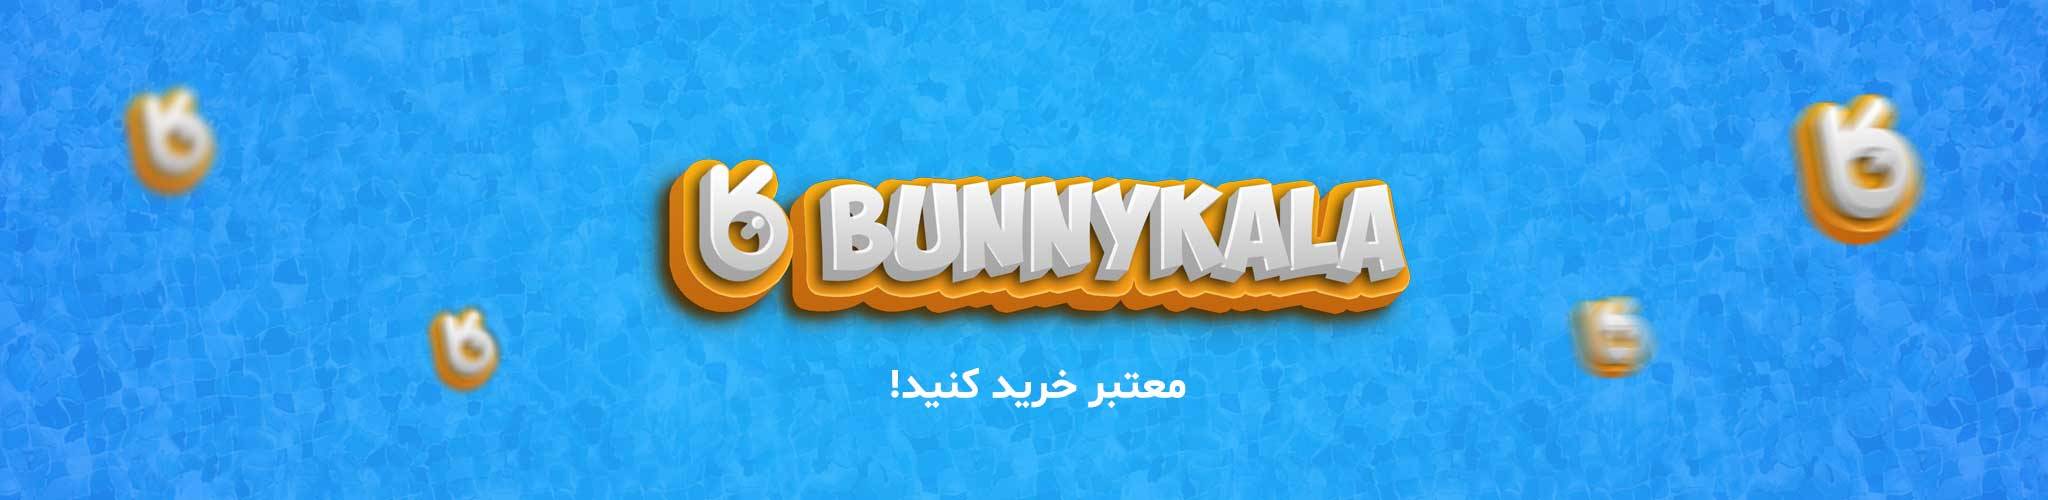 bunnykala.com